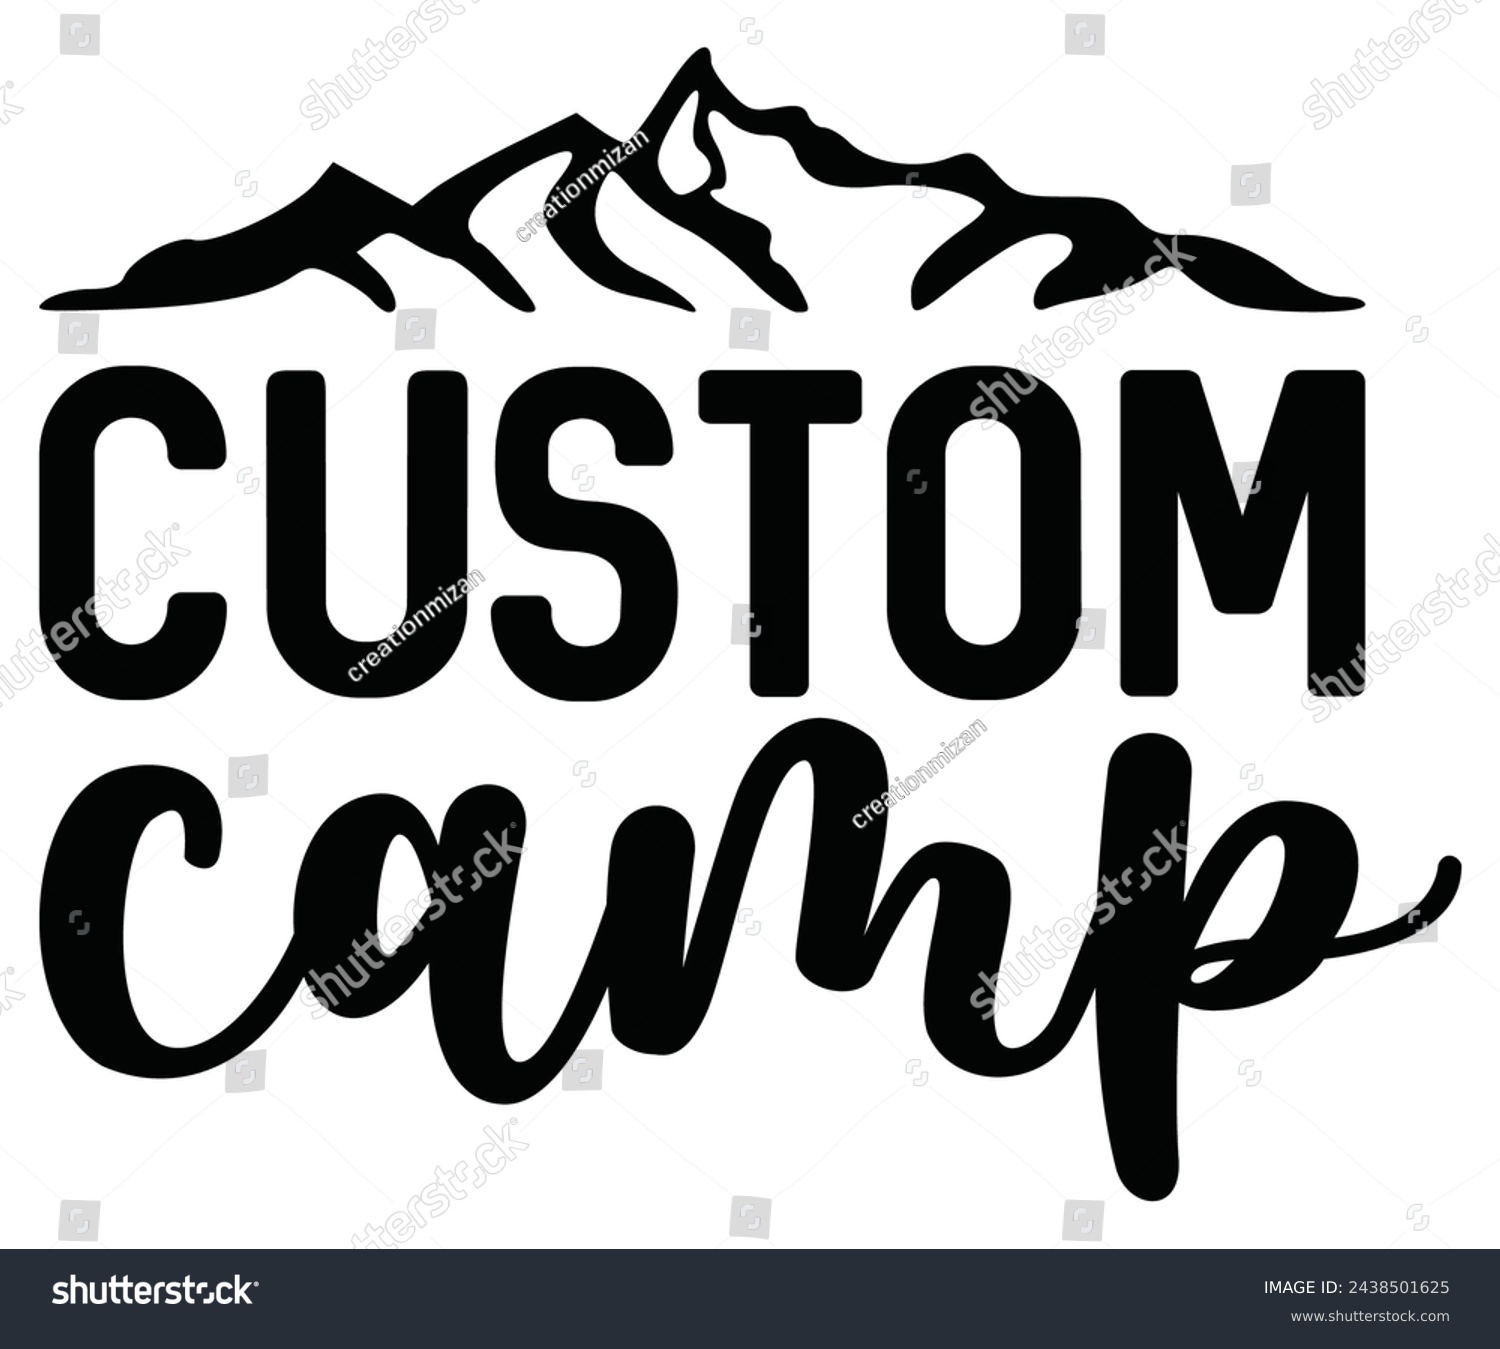 SVG of Custom camp Svg,Camping Svg,Hiking,Funny Camping,Adventure,Summer Camp,Happy Camper,Camp Life,Camp Saying,Camping Shirt svg